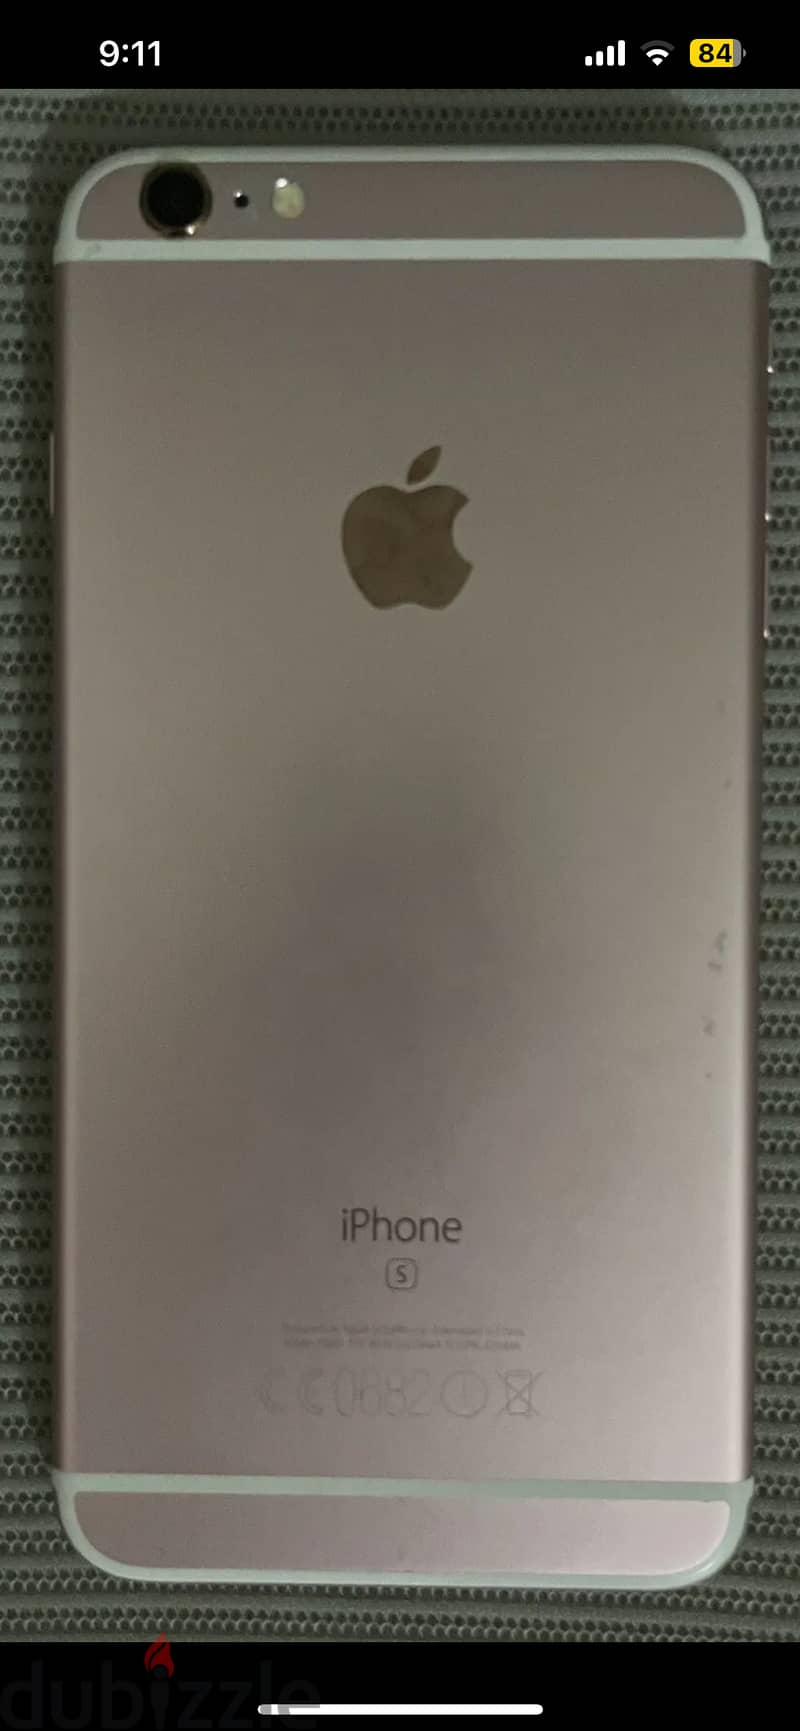 Apple iPhone 6s Plus - 64GB - Rose Gold (Fully Unlocked). 2